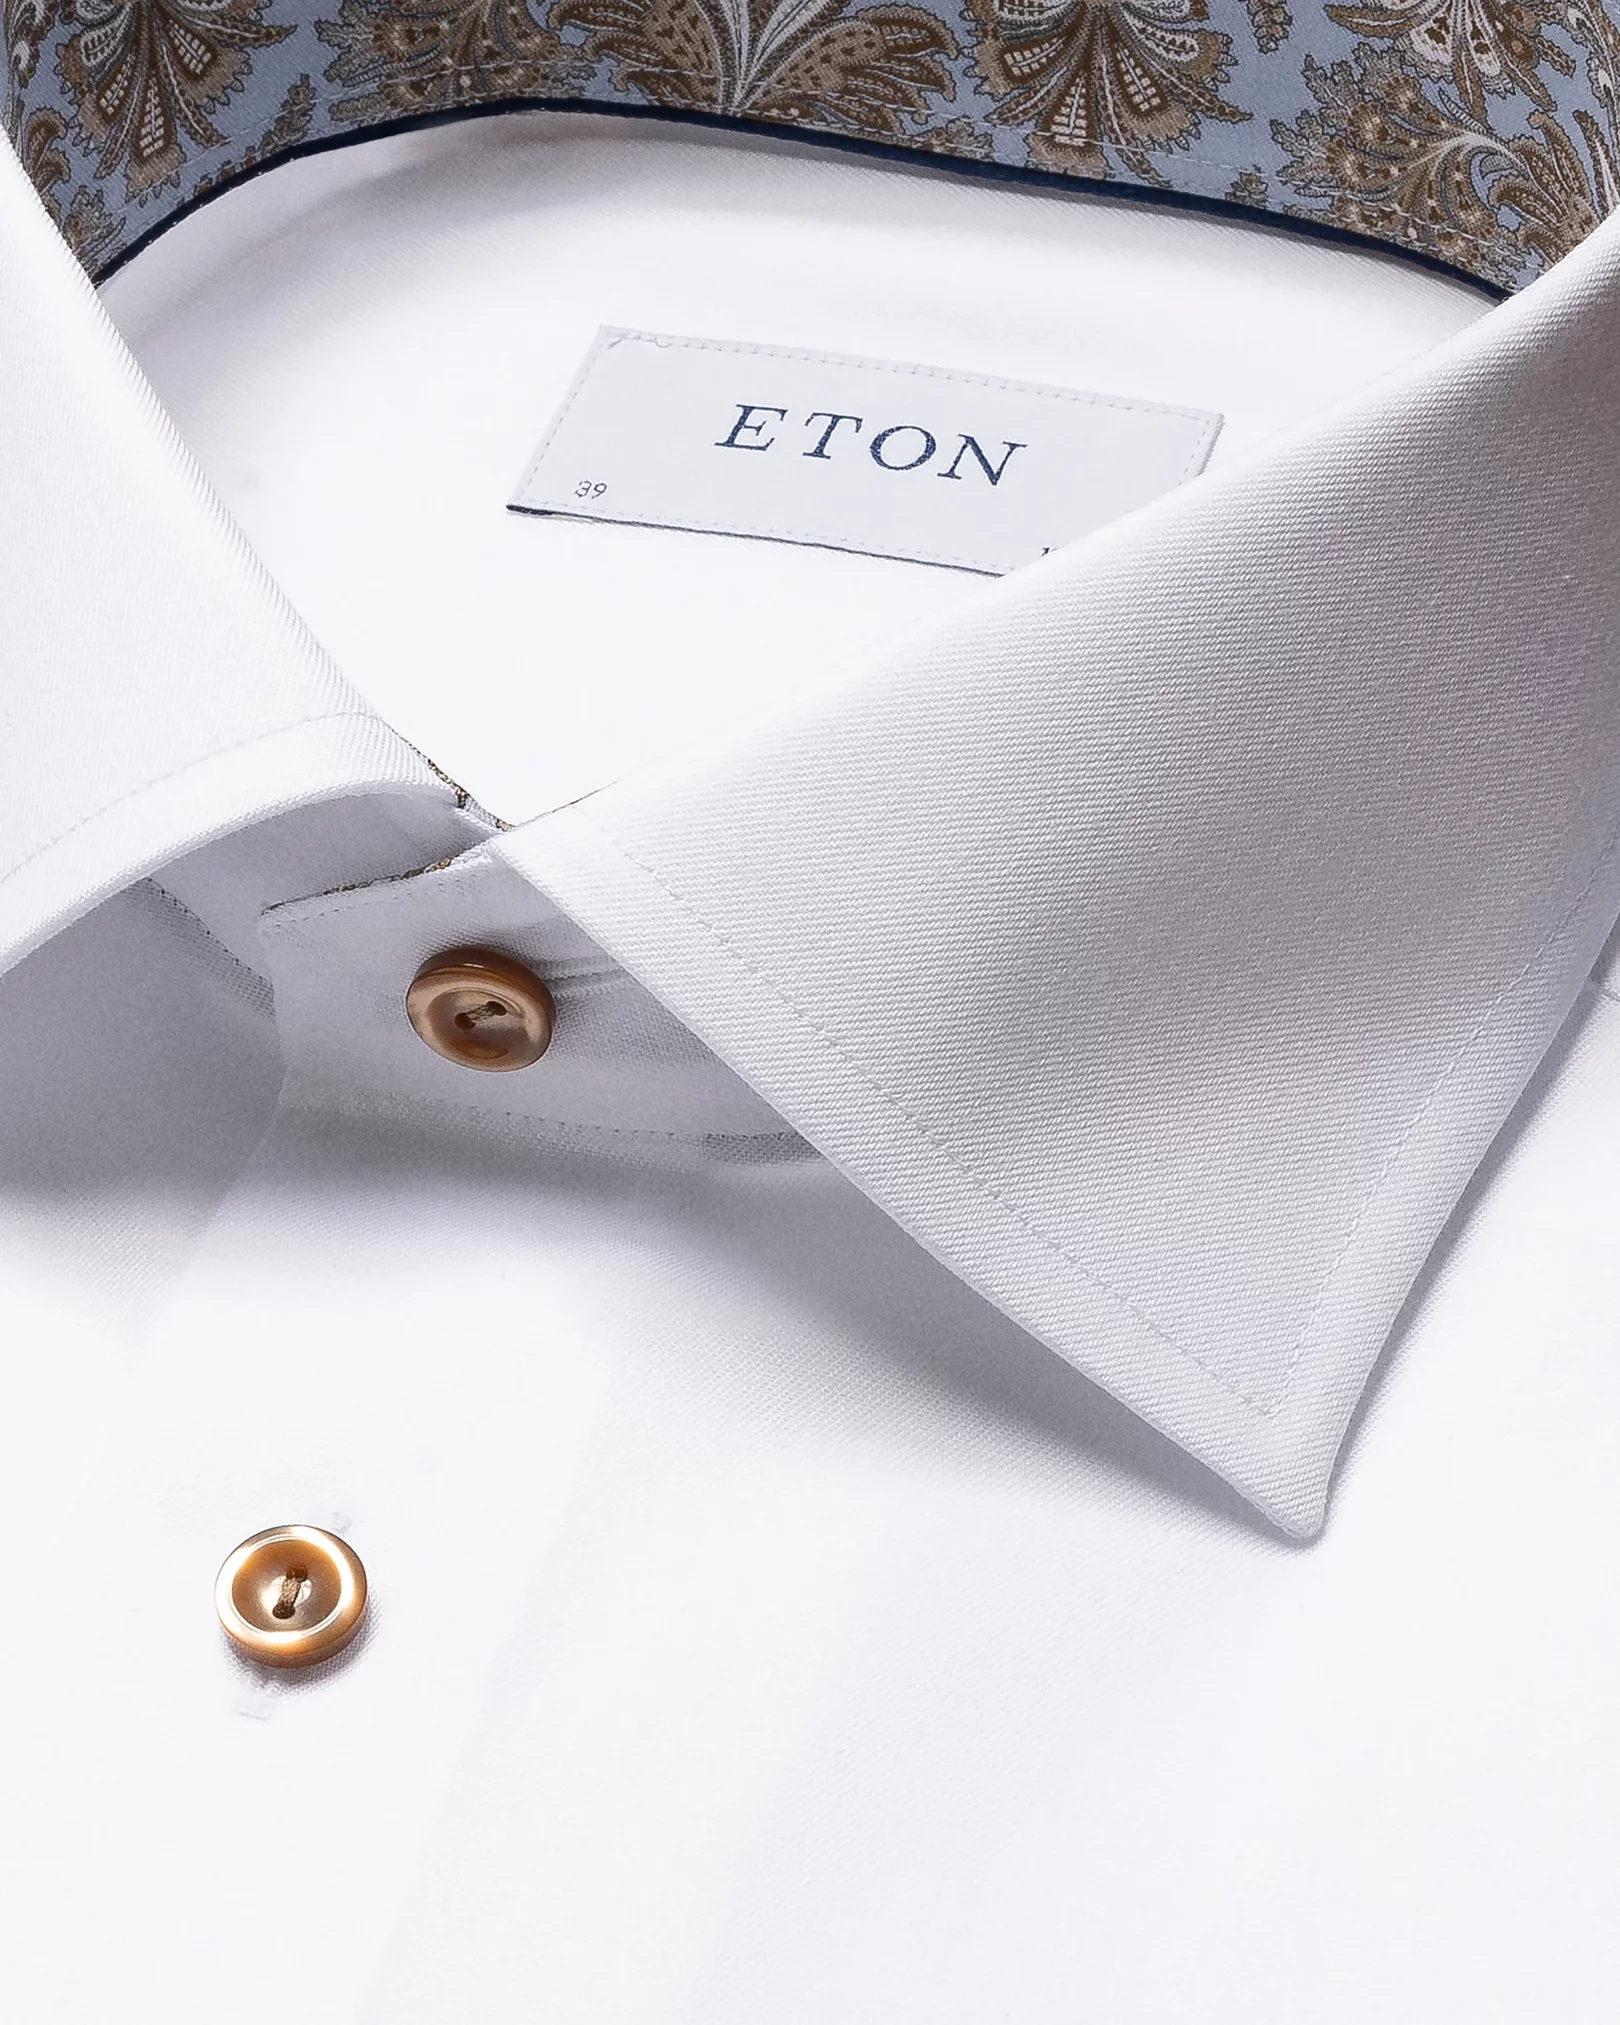 Eton - classic signature twill shirt